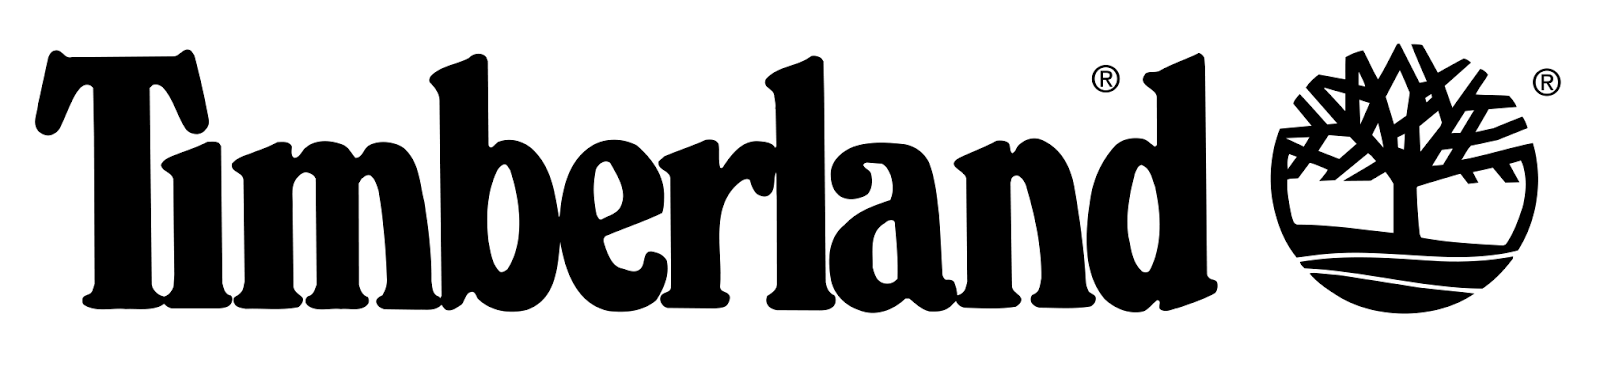 History of All Logos: All Timberland Logos